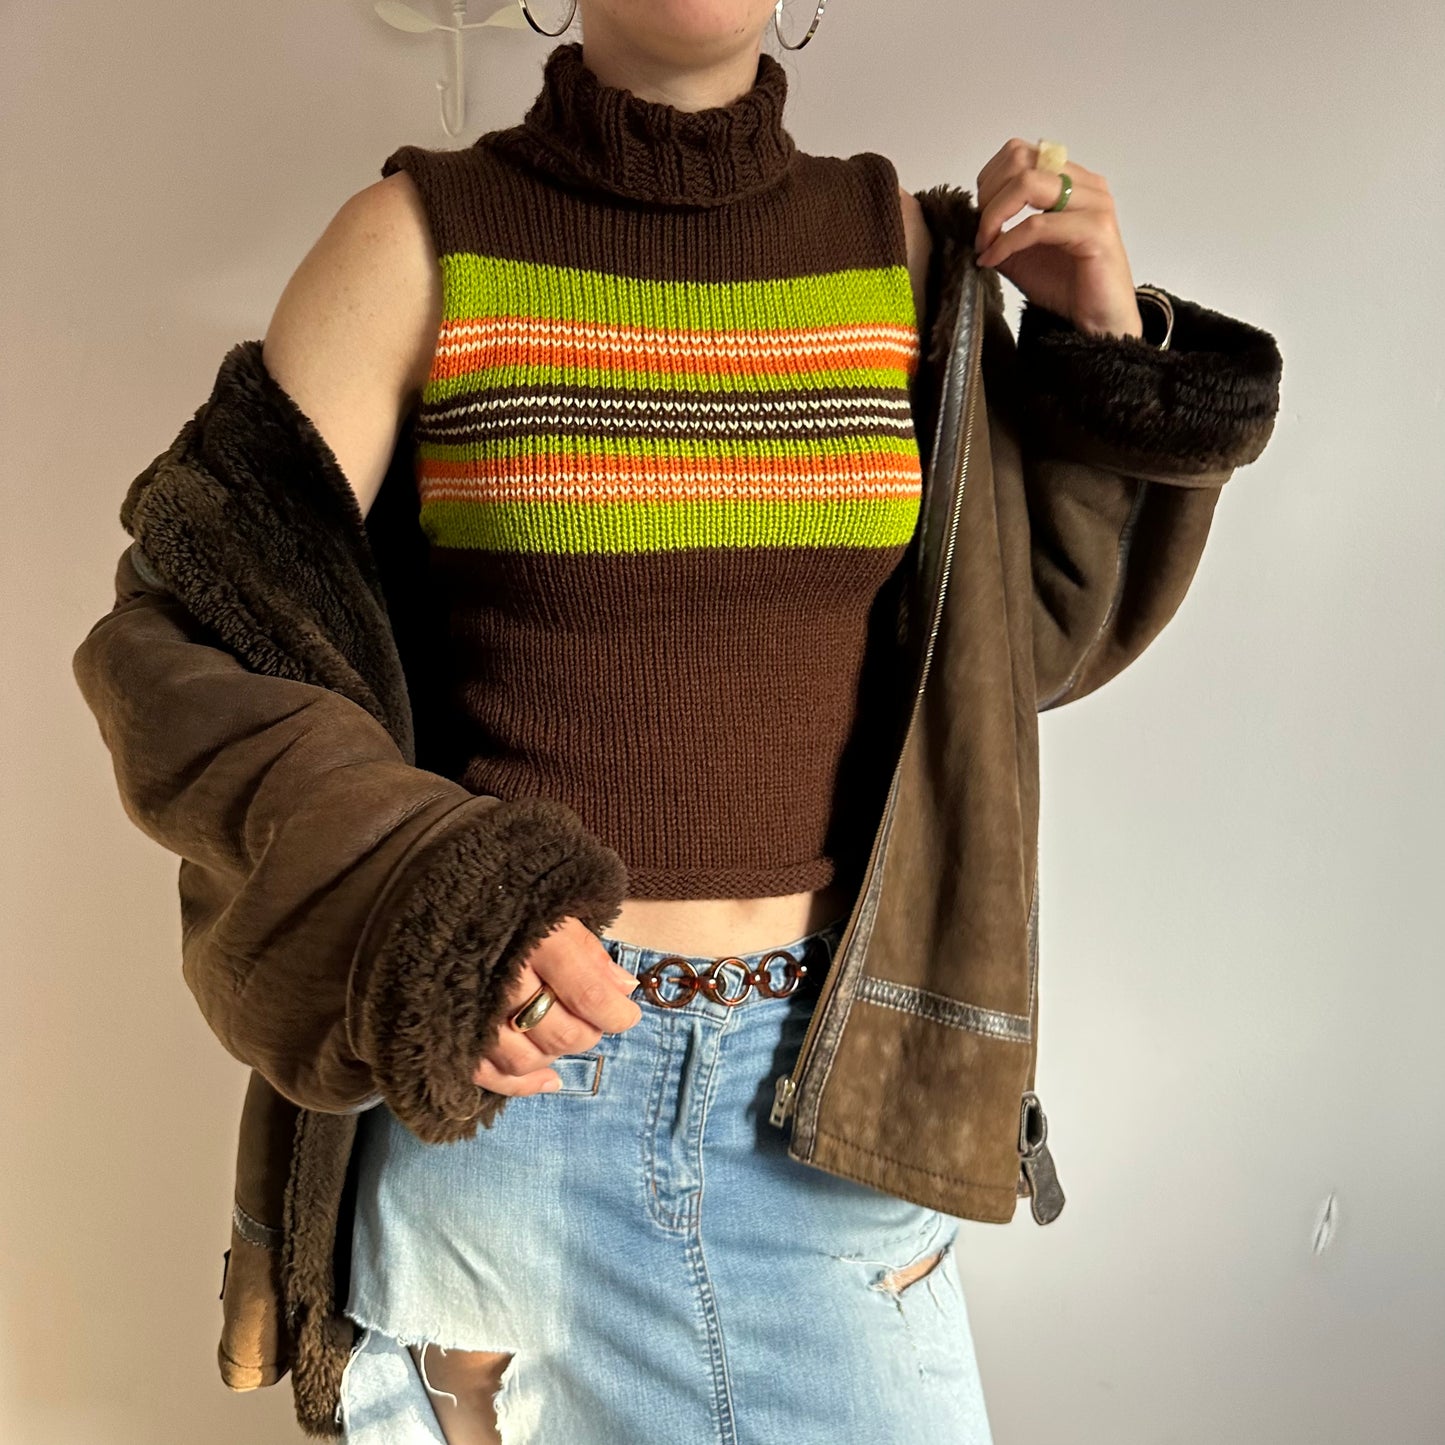 The Linea Vest - striped turtleneck knit vest